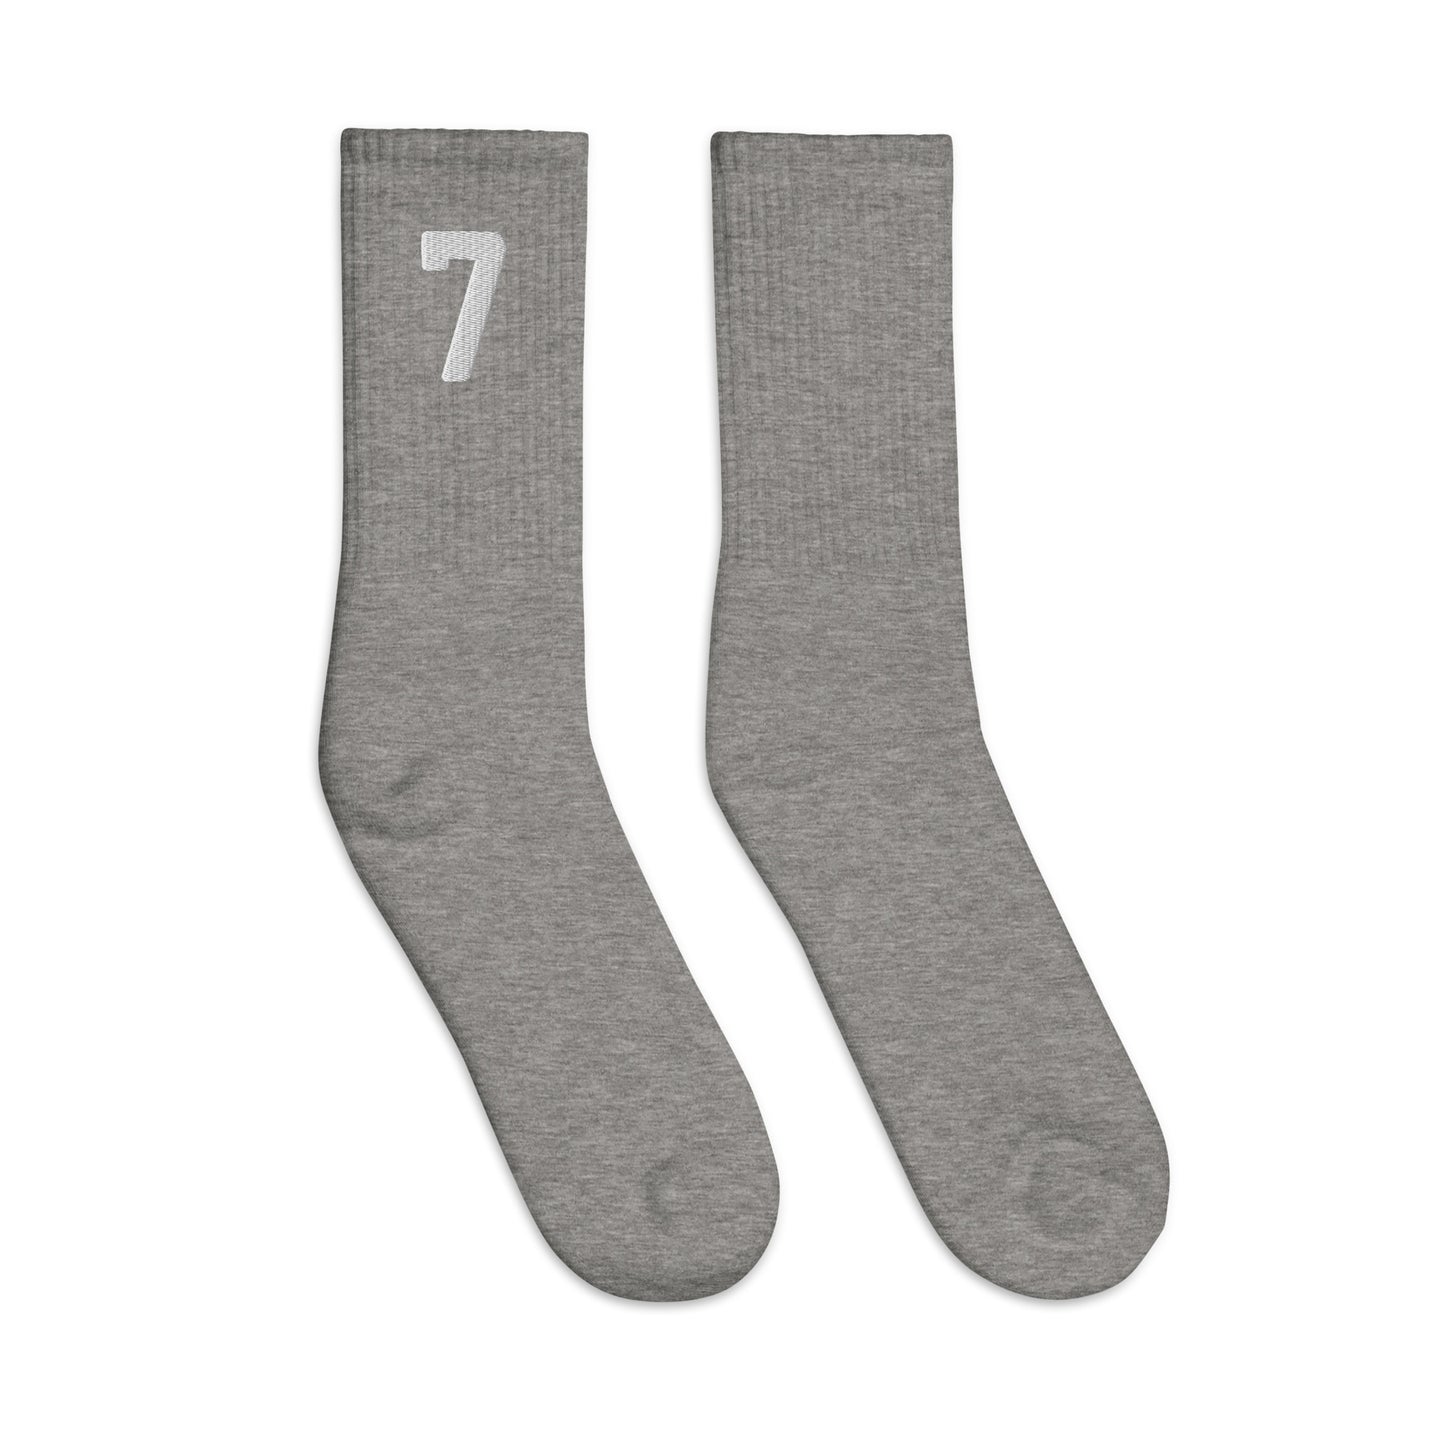 Number 7 - Embroidered socks